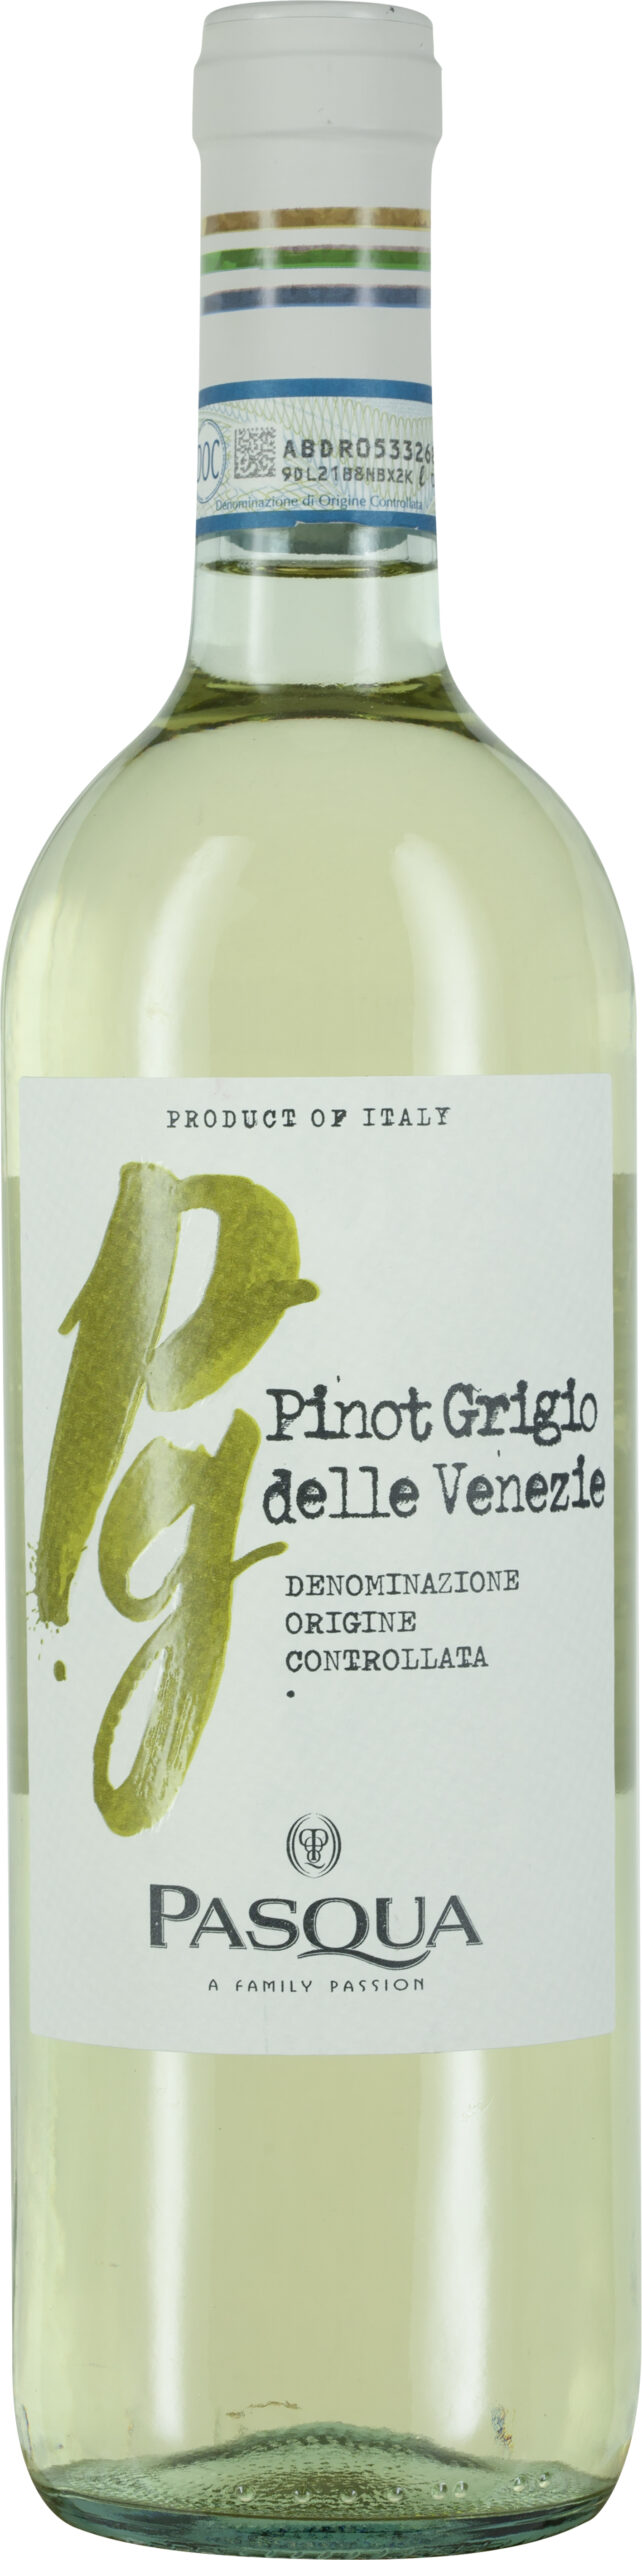 Venezie DOC delle Weine Grigio - Pinot Schenk Lettere, Pasqua